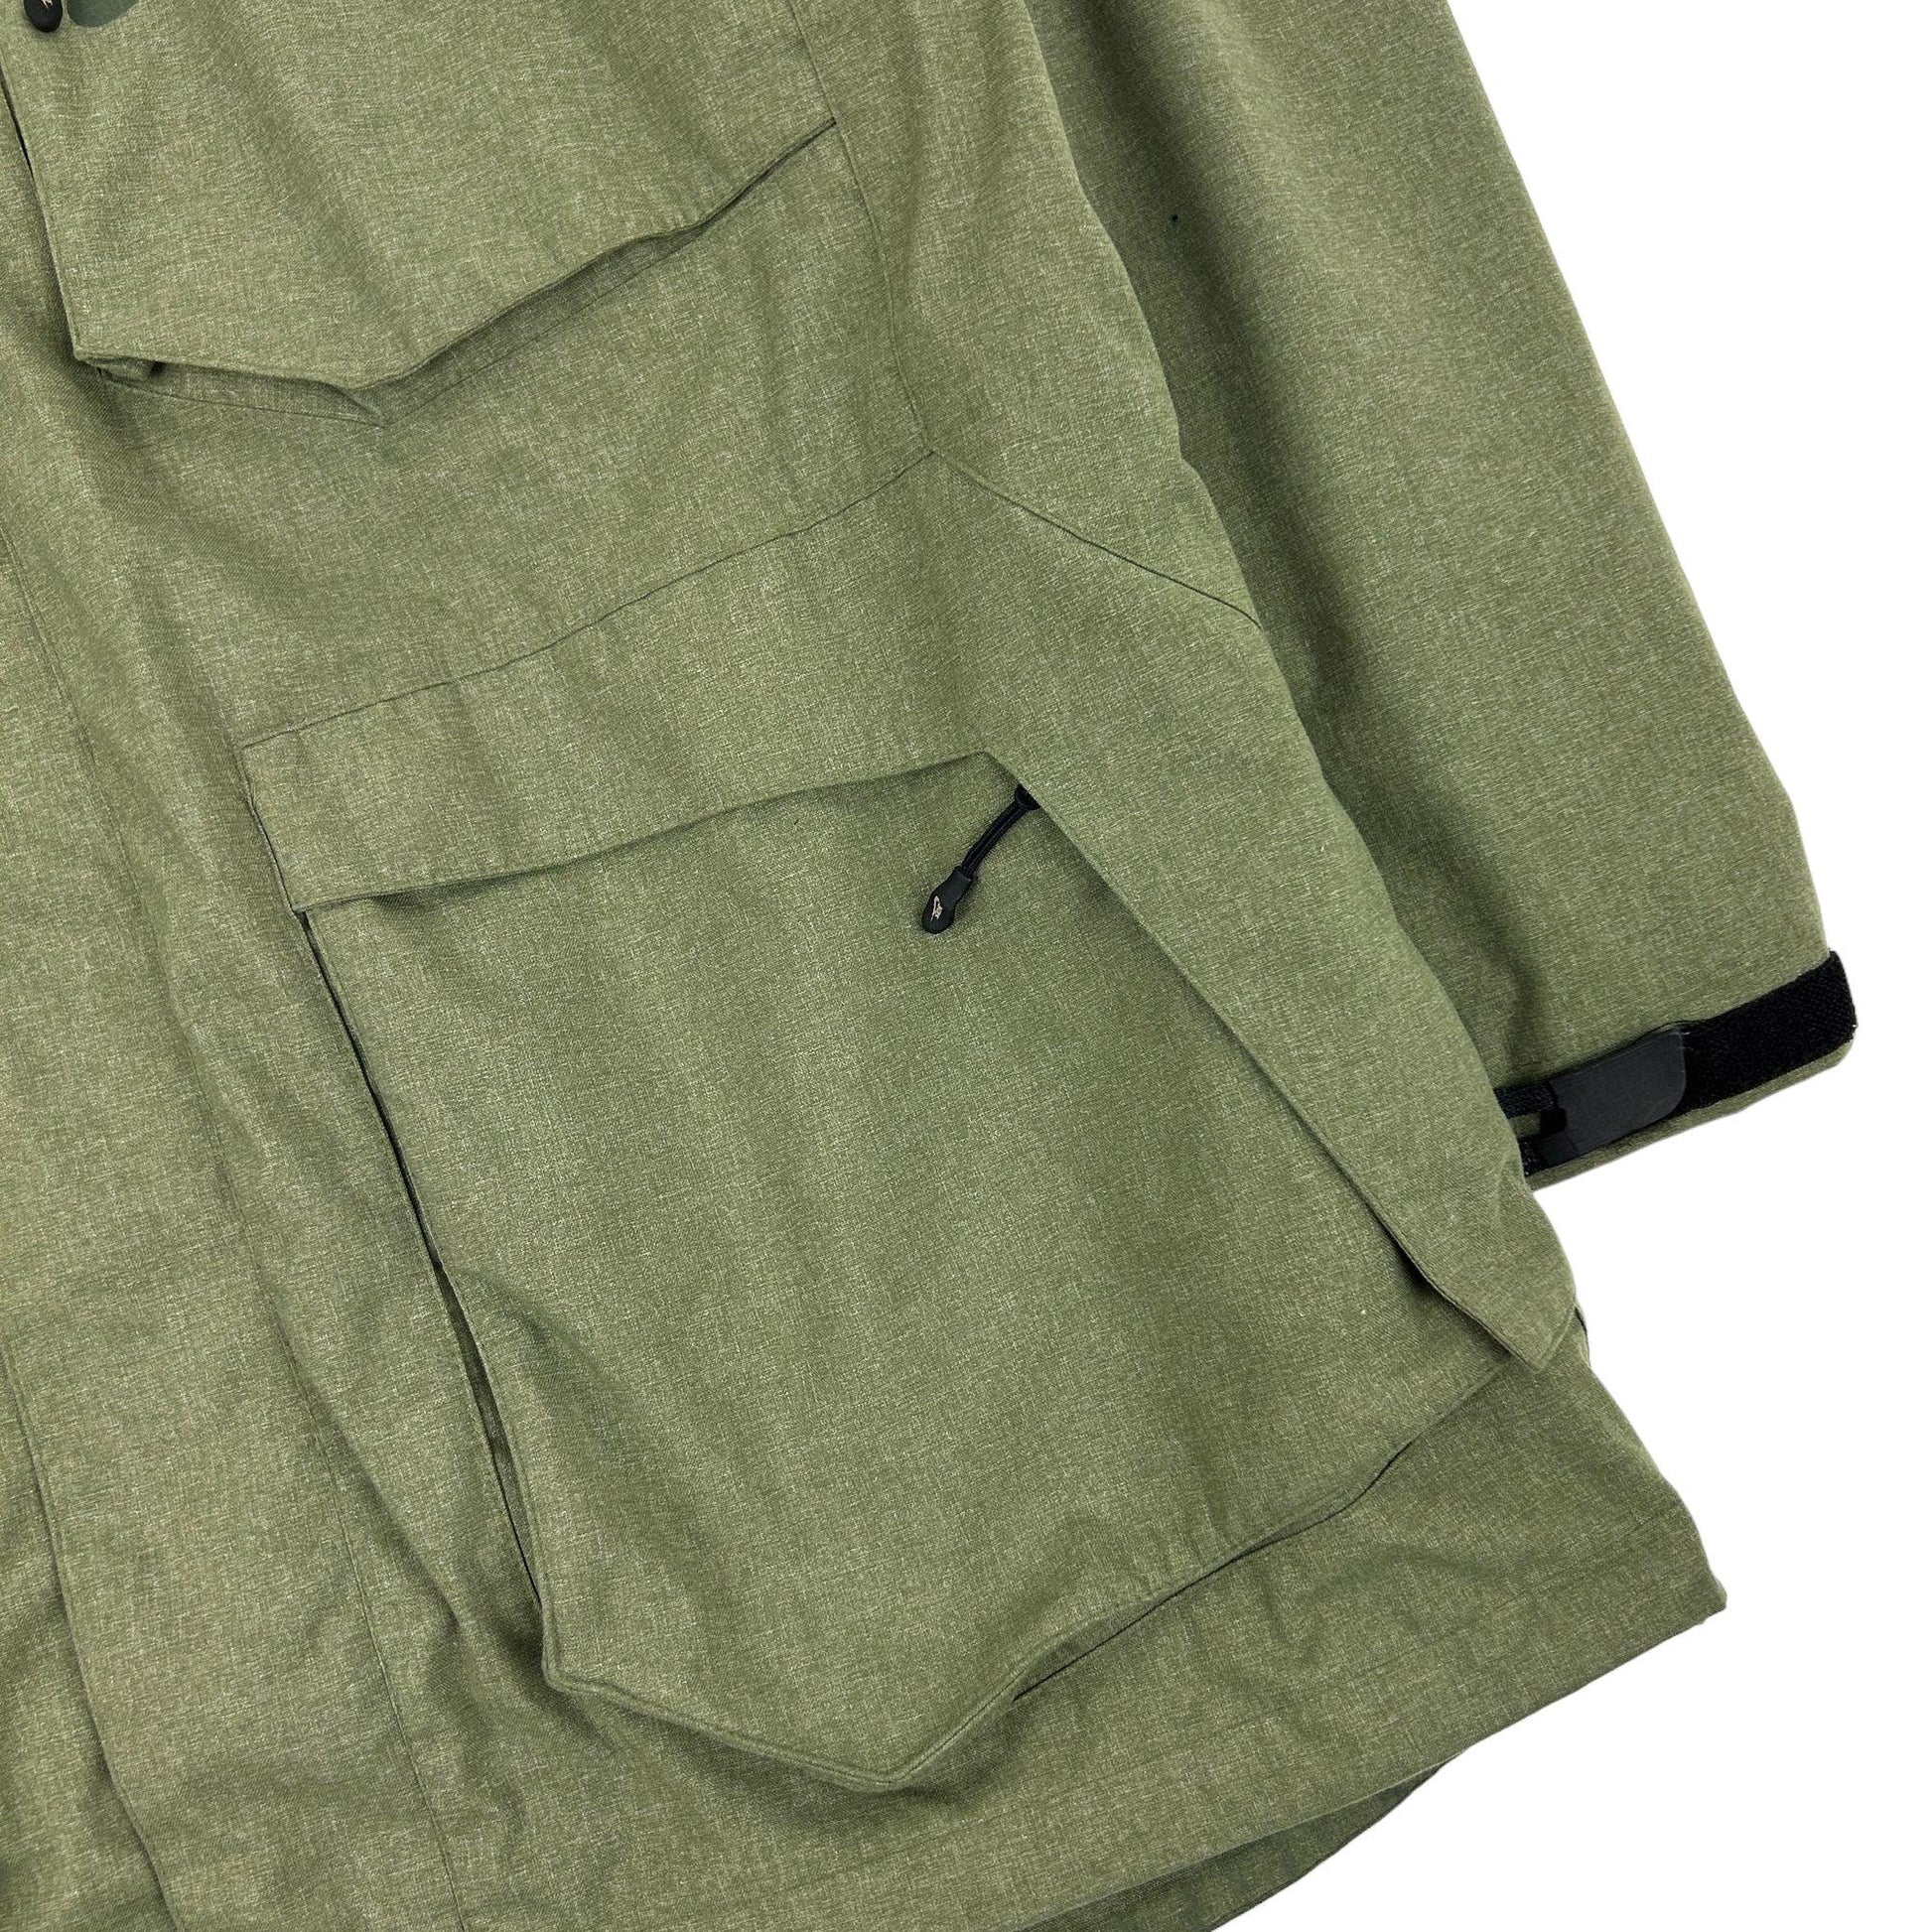 Vintage Nike Hooded Multi Pocket Jacket Size XL - Known Source